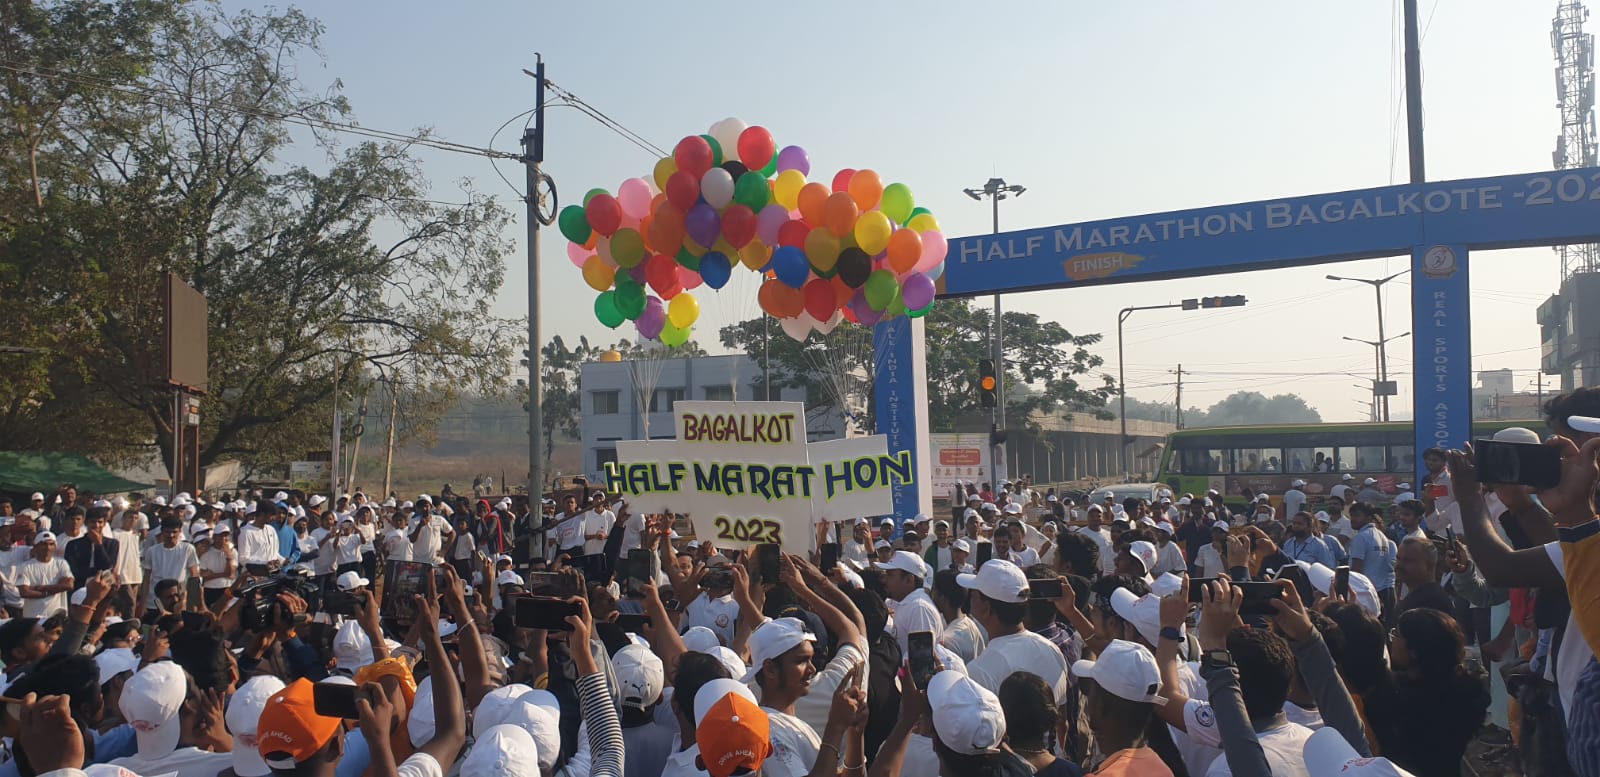 Bagalkot Half Marathon: ಬಾಗಲಕೋಟೆ ಹಾಫ್ ಮ್ಯಾರಥಾನ್‌ಗೆ ಅಭೂತಪೂರ್ವ ಸ್ಪಂದನೆ